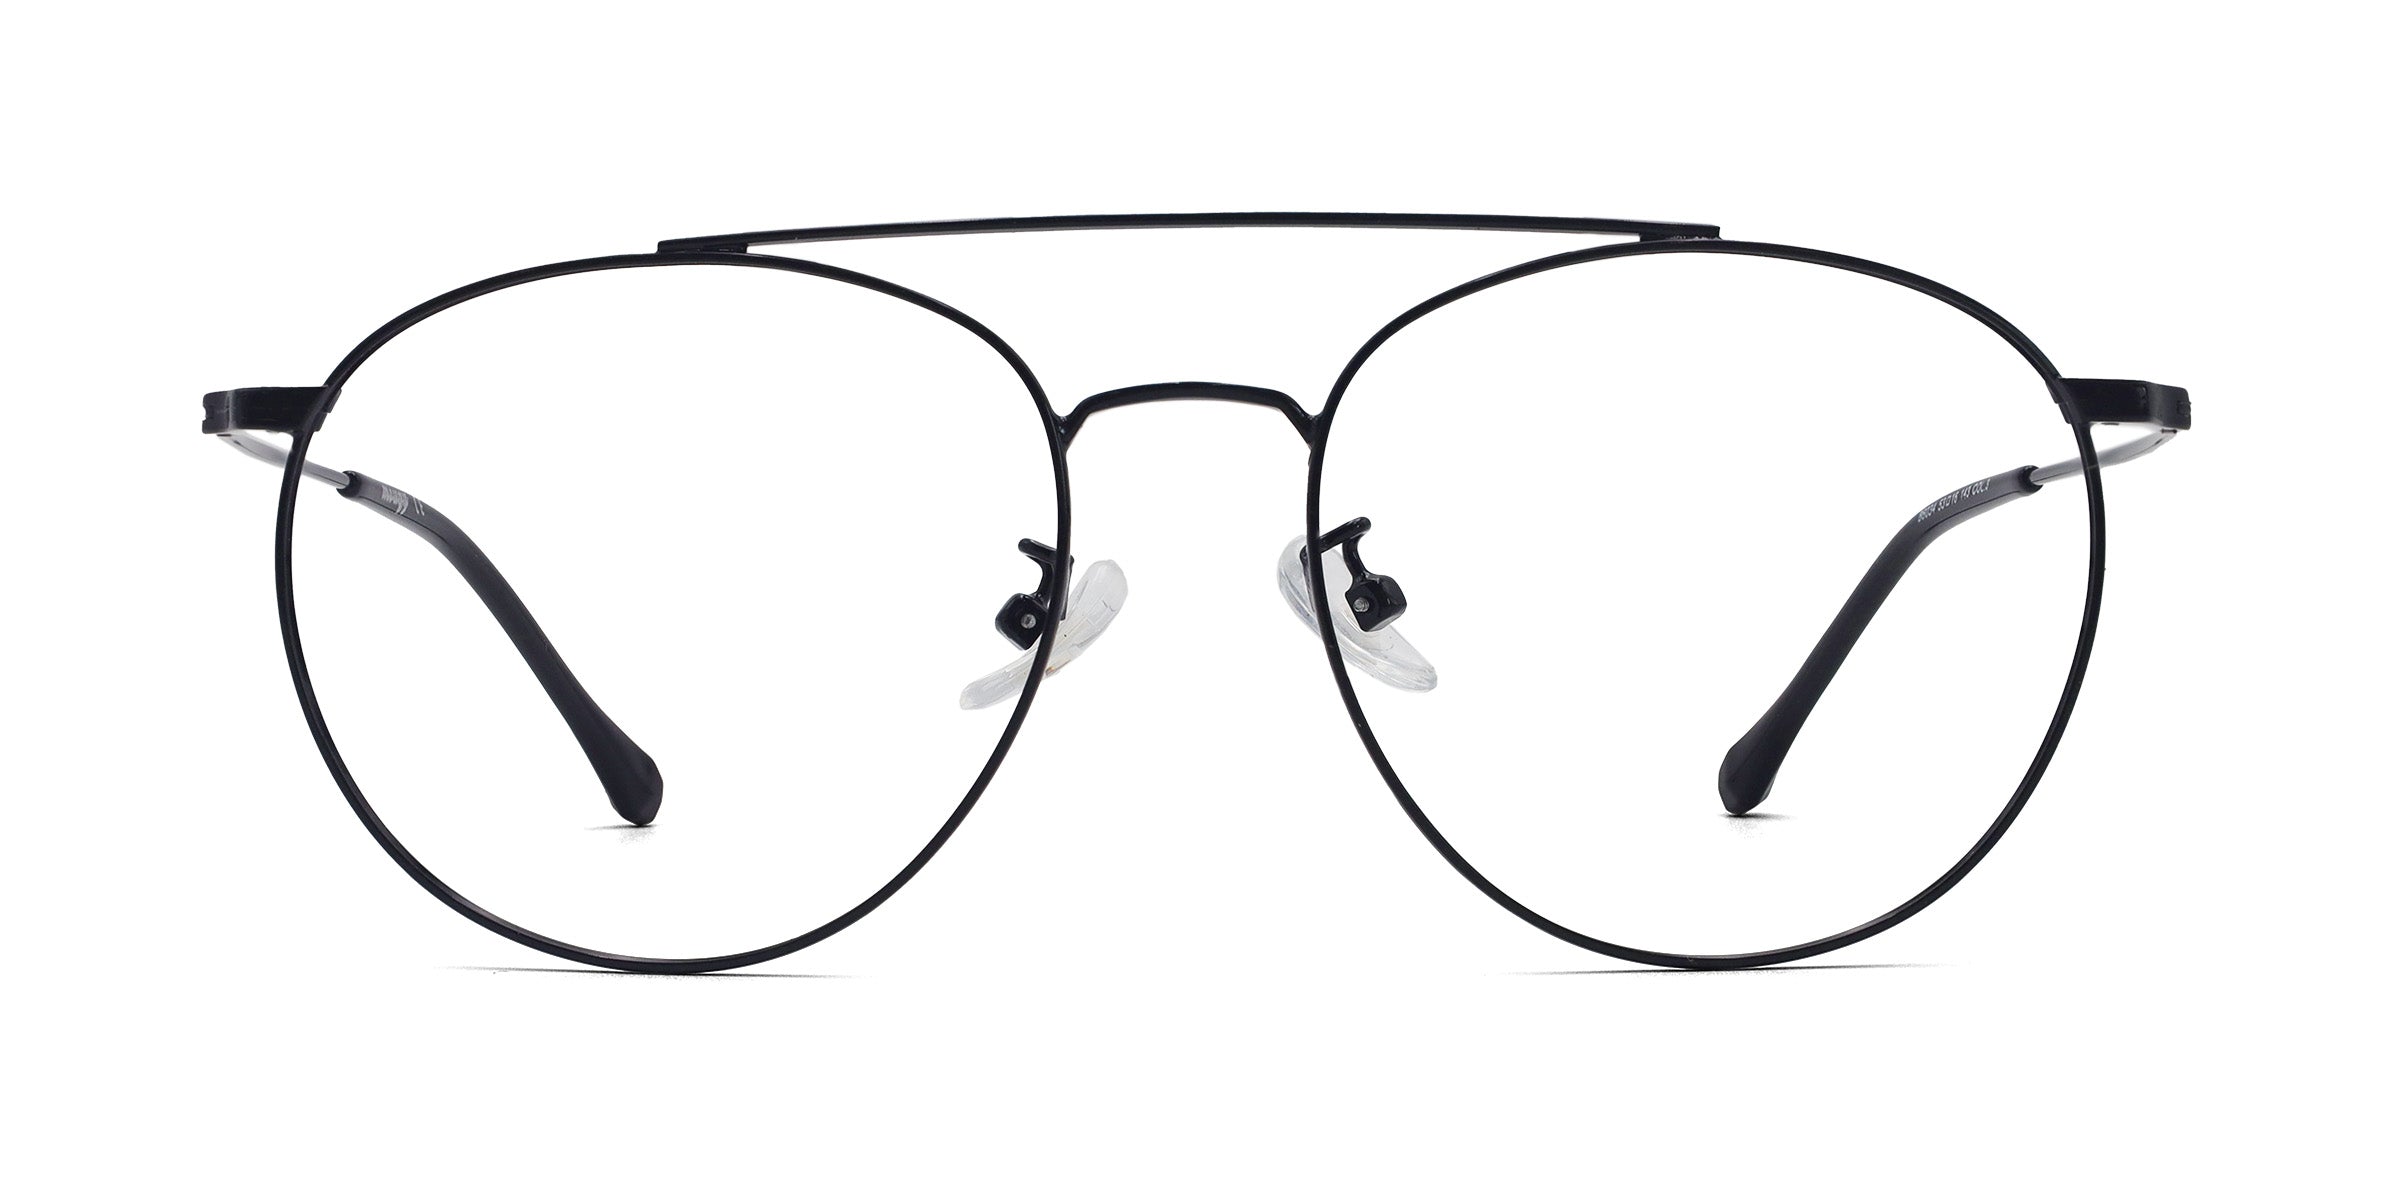 jake aviator black eyeglasses frames front view